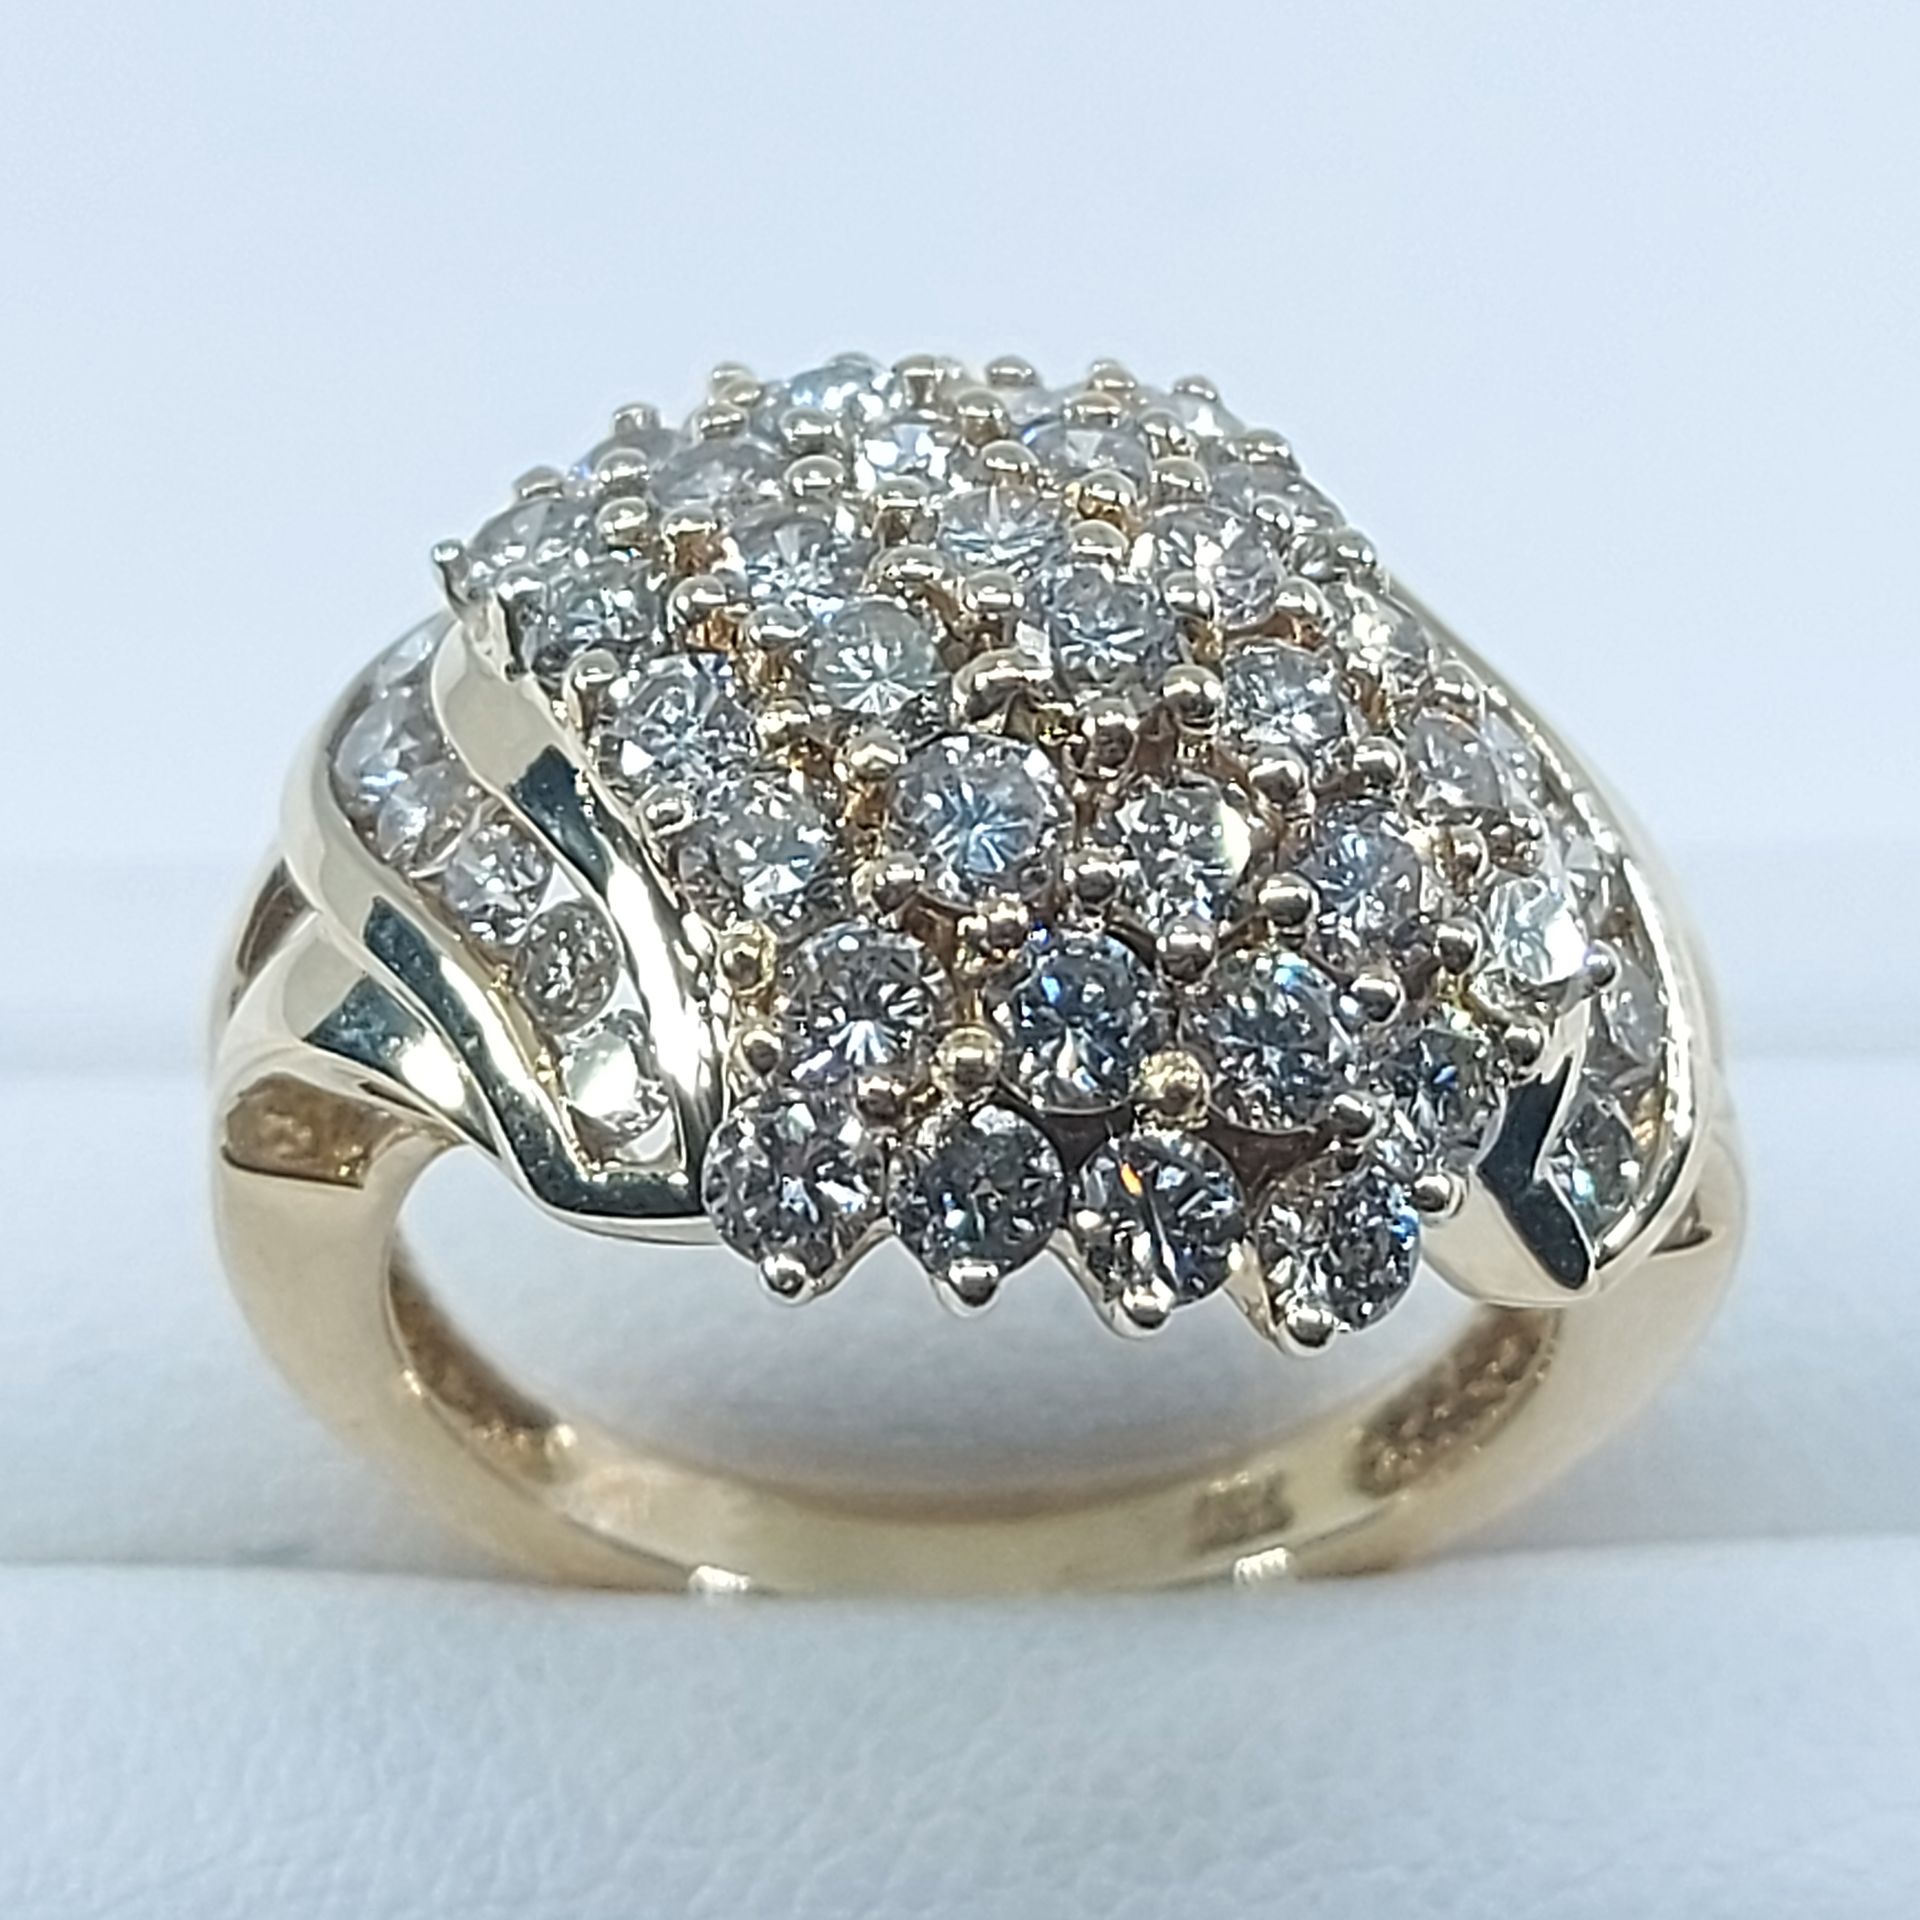 Bague or jaune et diamants 18K黄金戒指，圆形明亮式切割钻石镶嵌在圆顶的爪子上 - 钻石总重约3.40克拉 - 金色印记 - 毛重约&hellip;